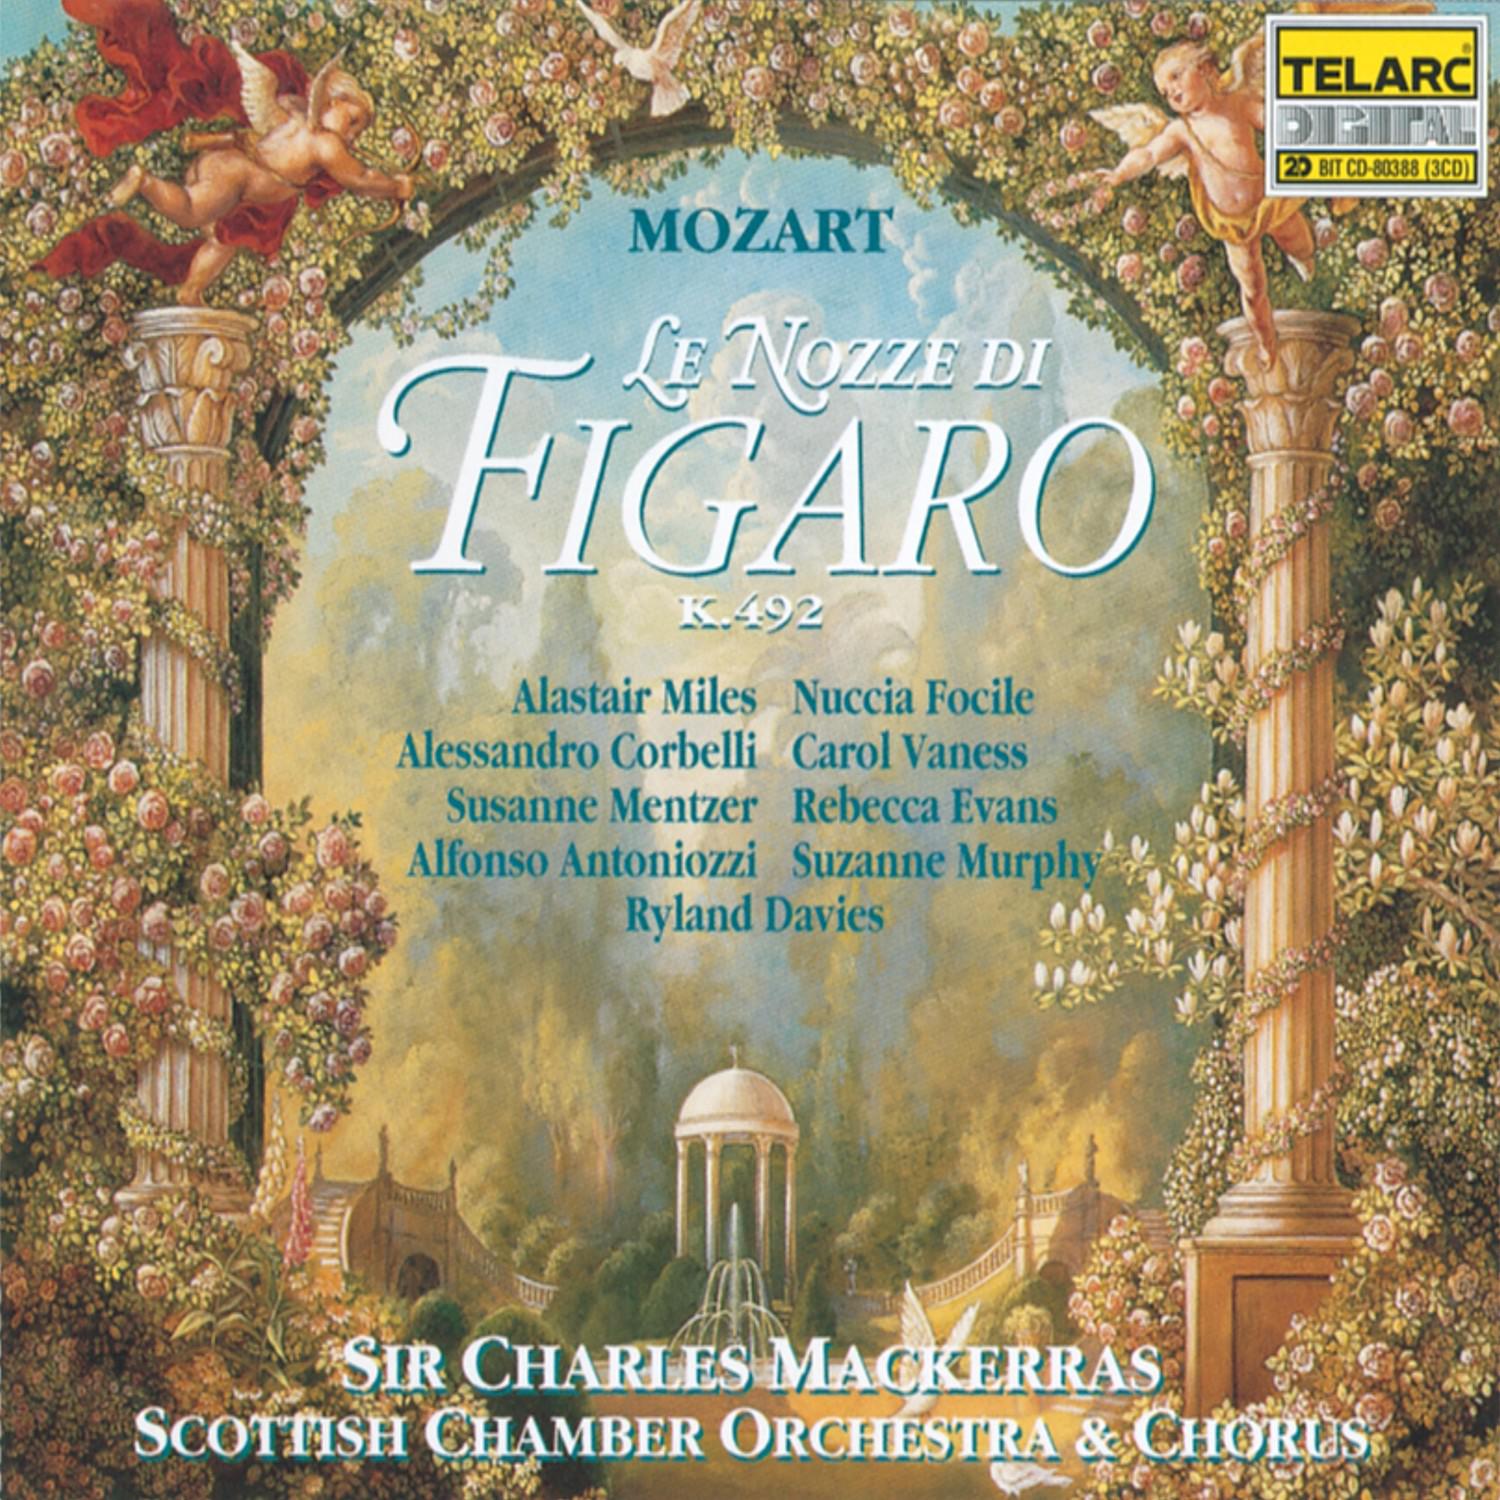 Marriage of Figaro: Recitativo: "Susanna, il ciel vi salvi"